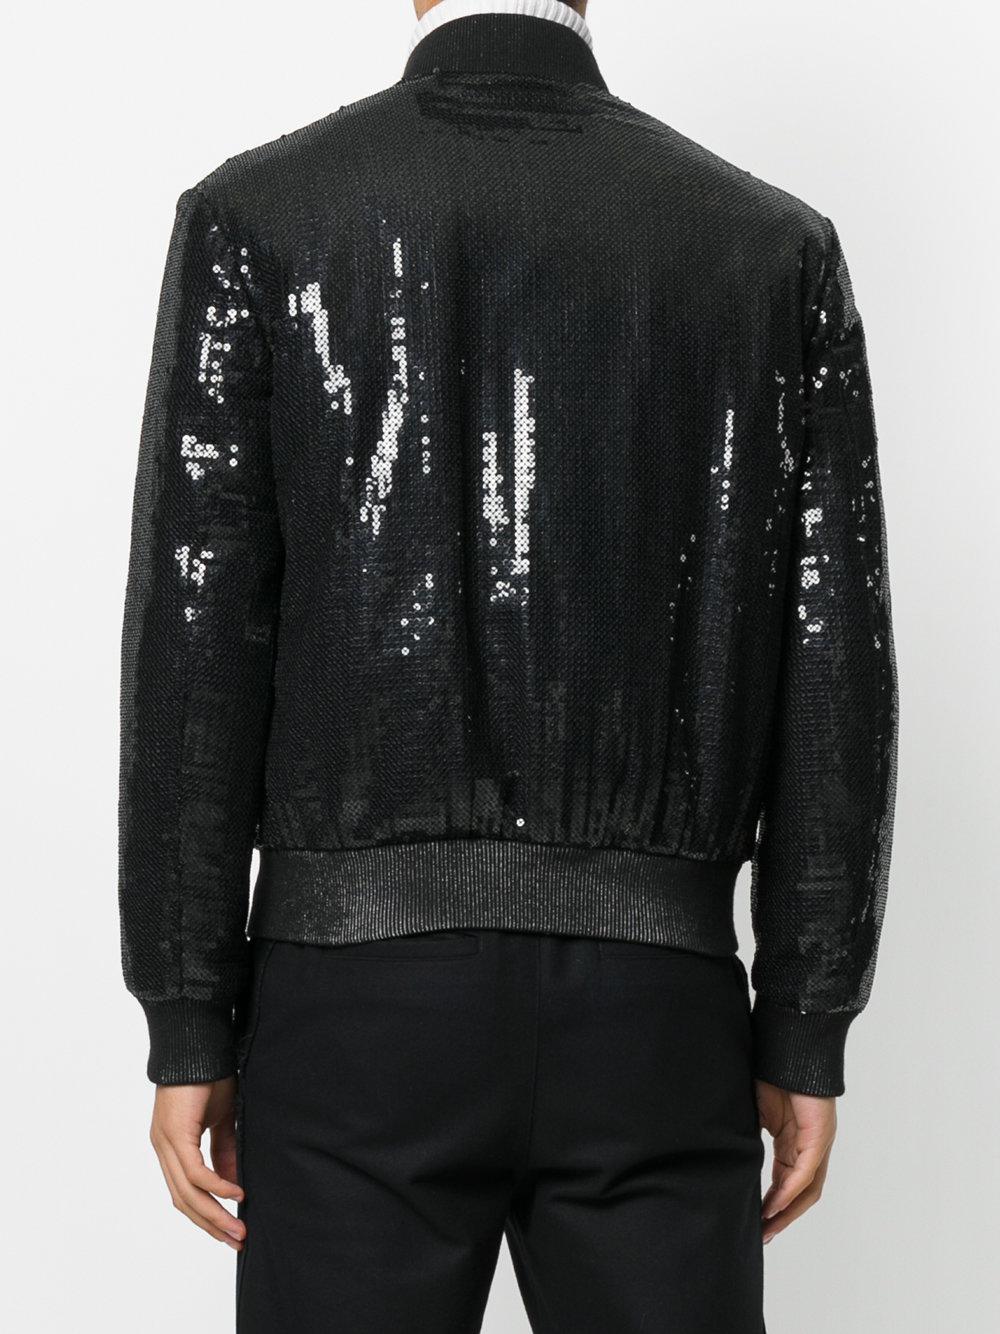 Saint Laurent Silk Sequin Embroidered Bomber Jacket in Black for Men - Lyst